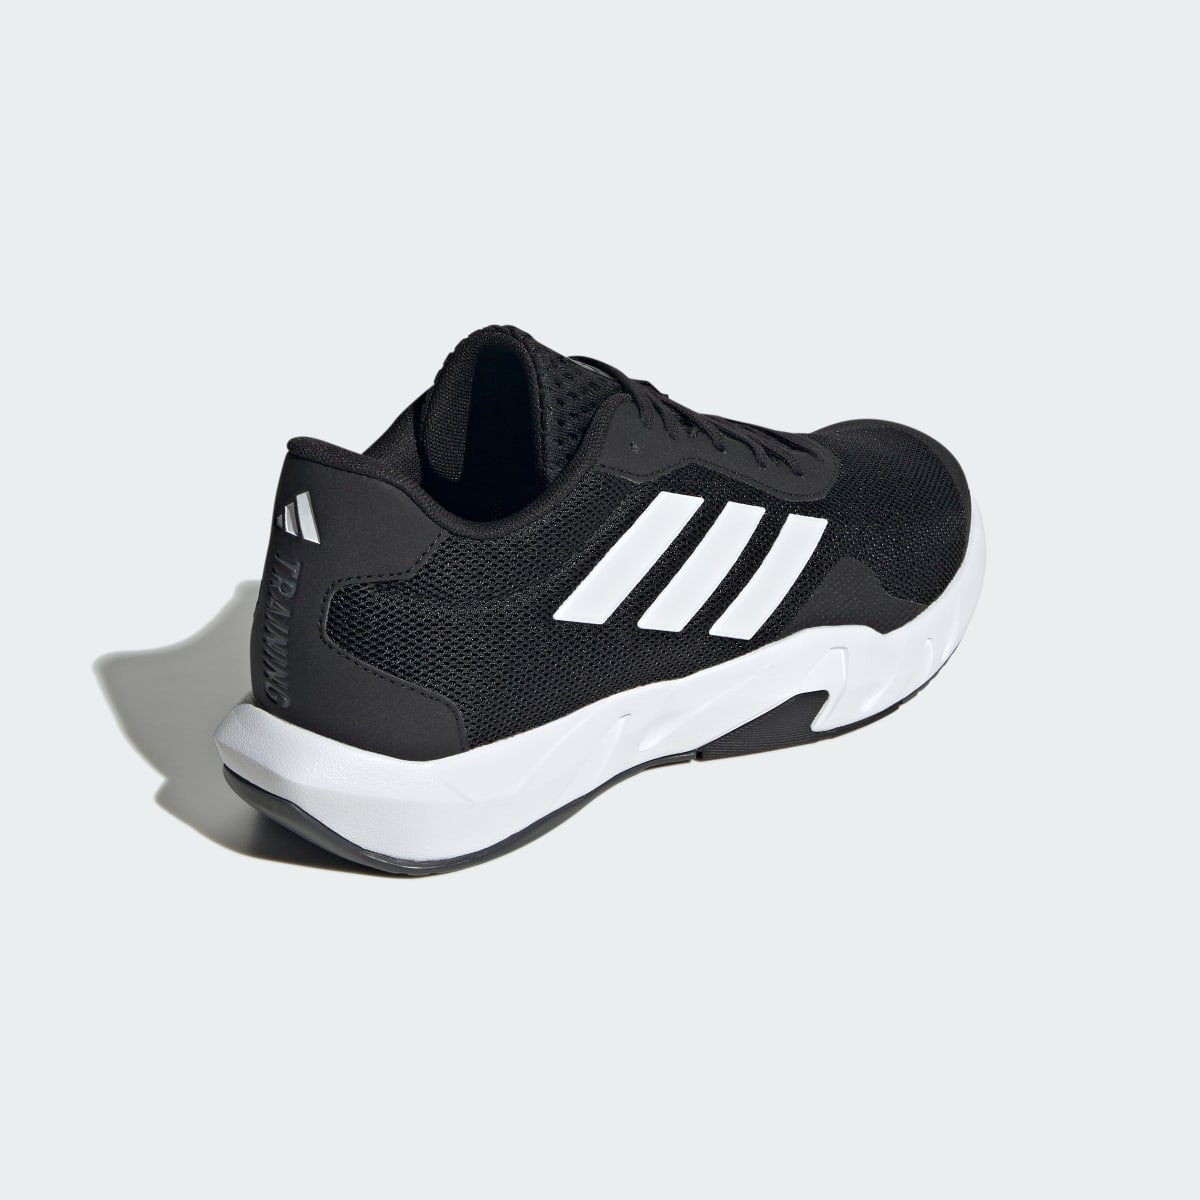 Adidas Amplimove Trainer Schuh. 6